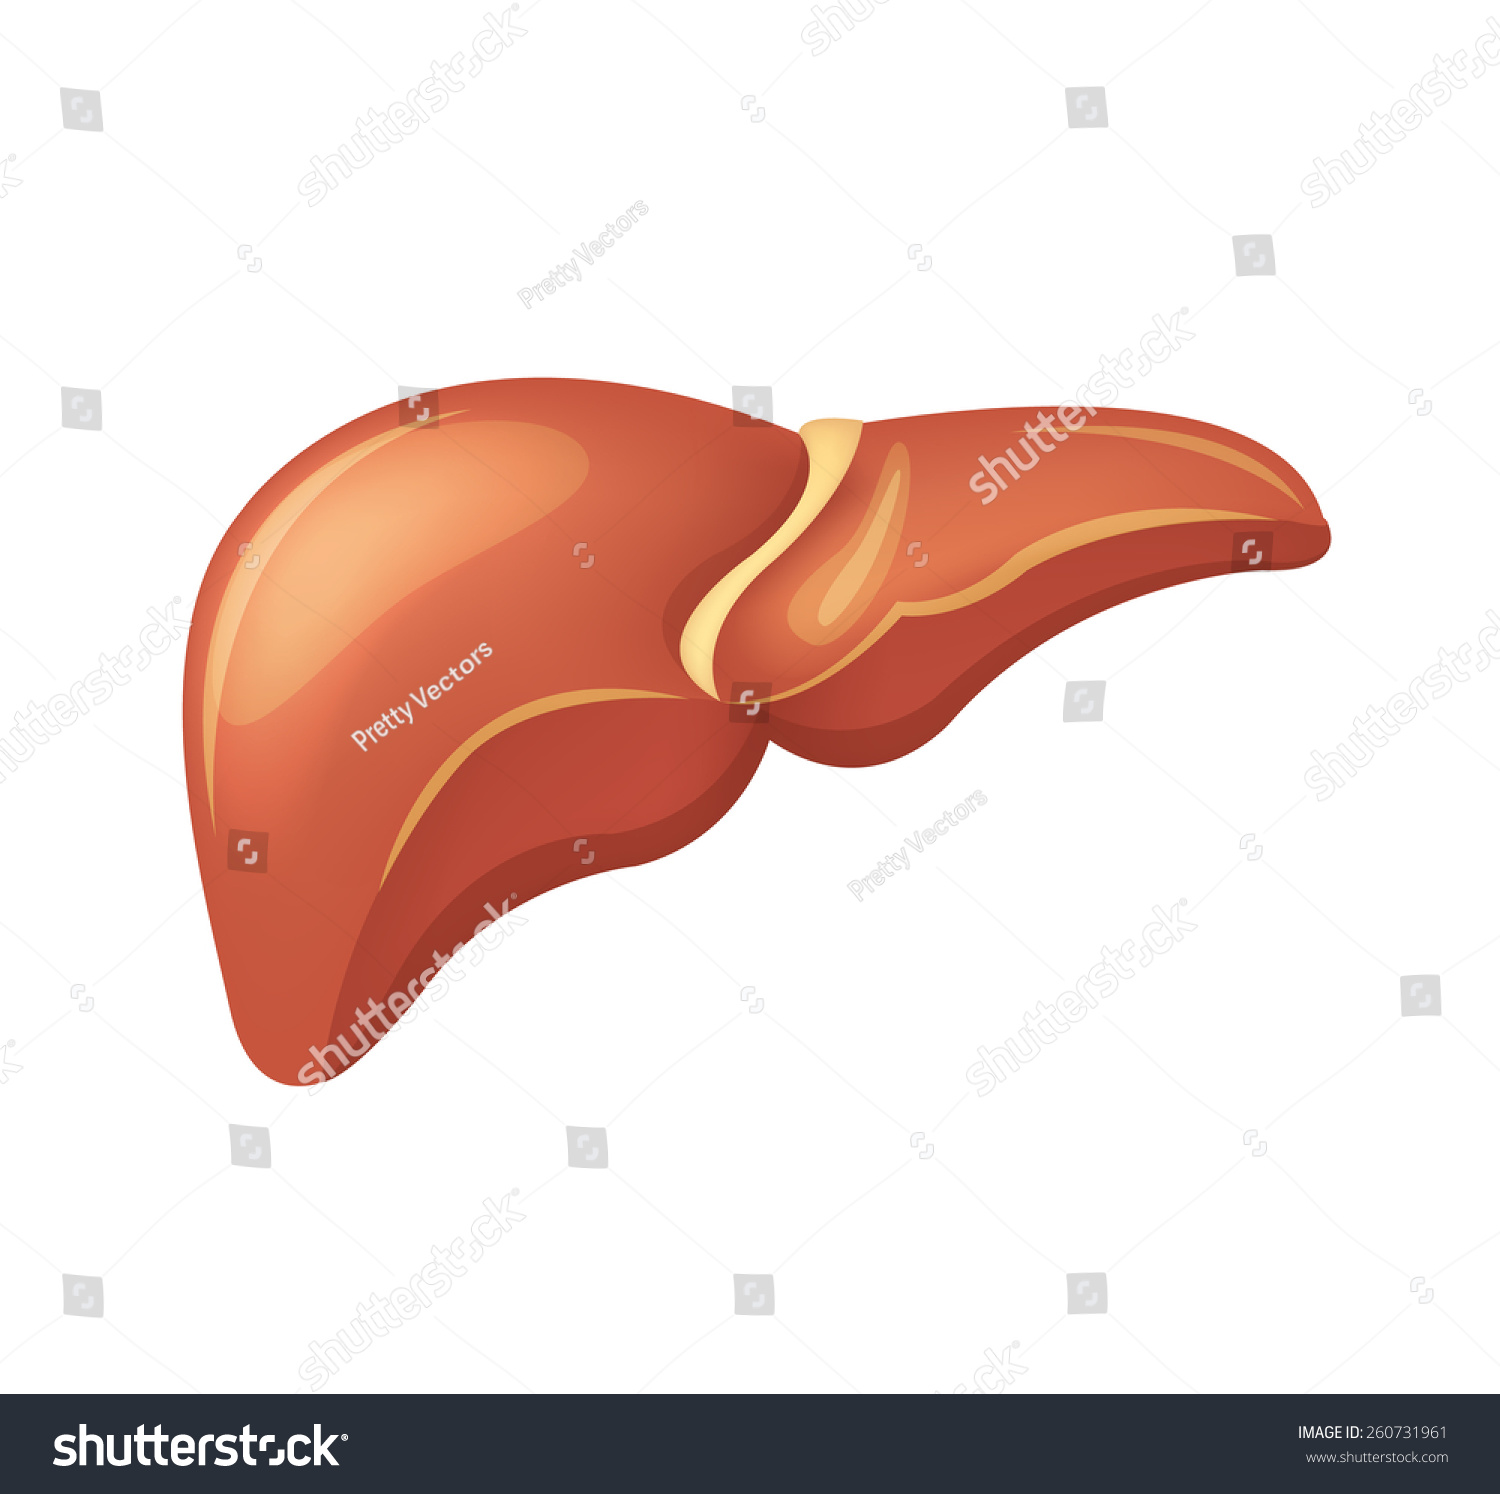 Vector Liver Illustration - 260731961 : Shutterstock